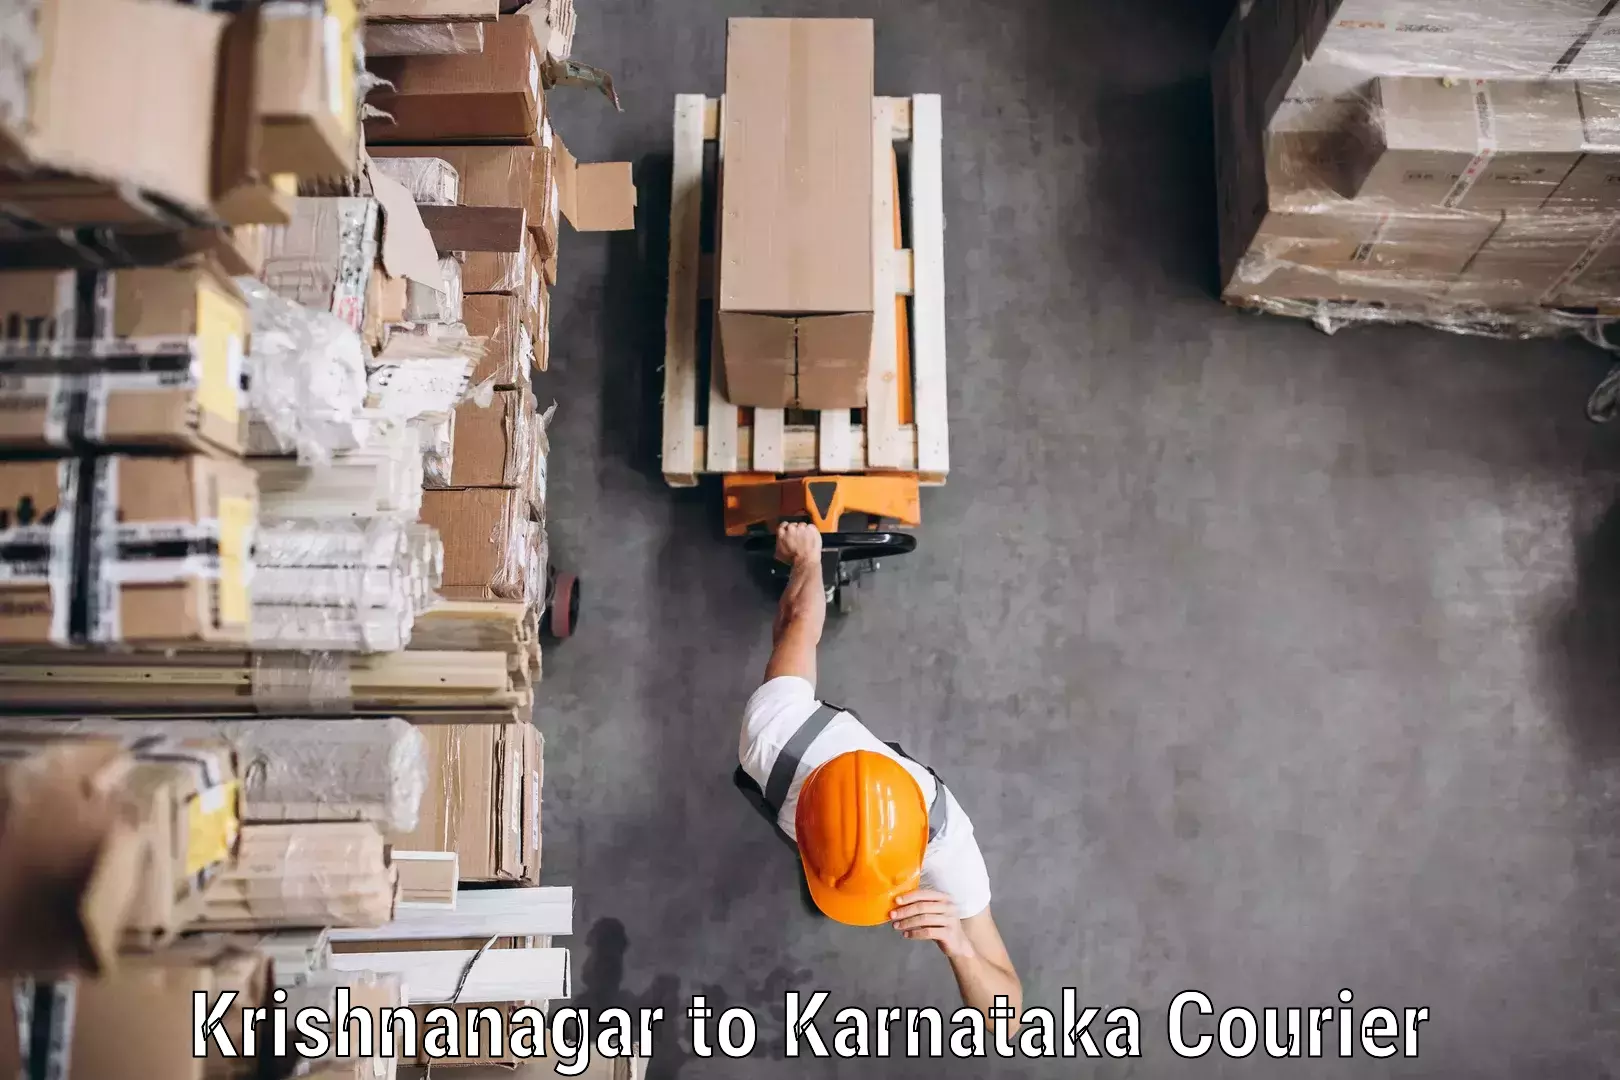 Seamless shipping experience Krishnanagar to Gurmatkal